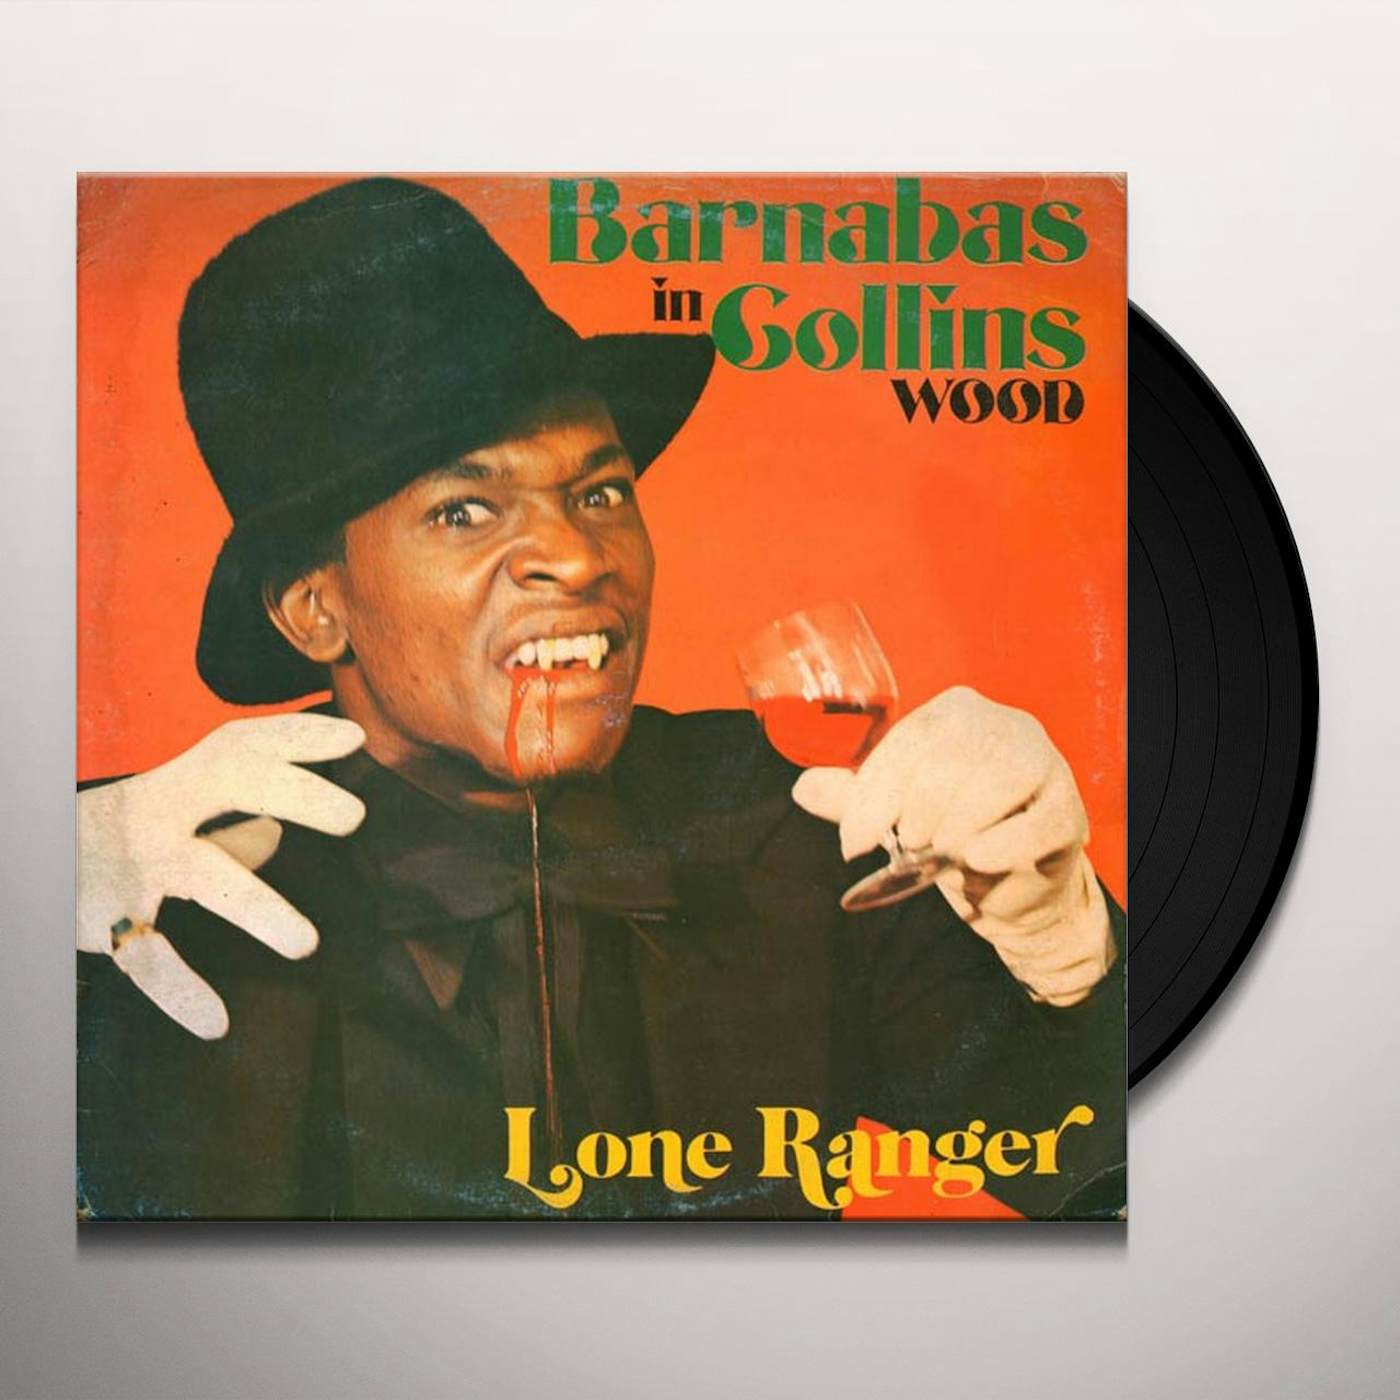 Lone Ranger Barnabas in Collins Wood Vinyl Record